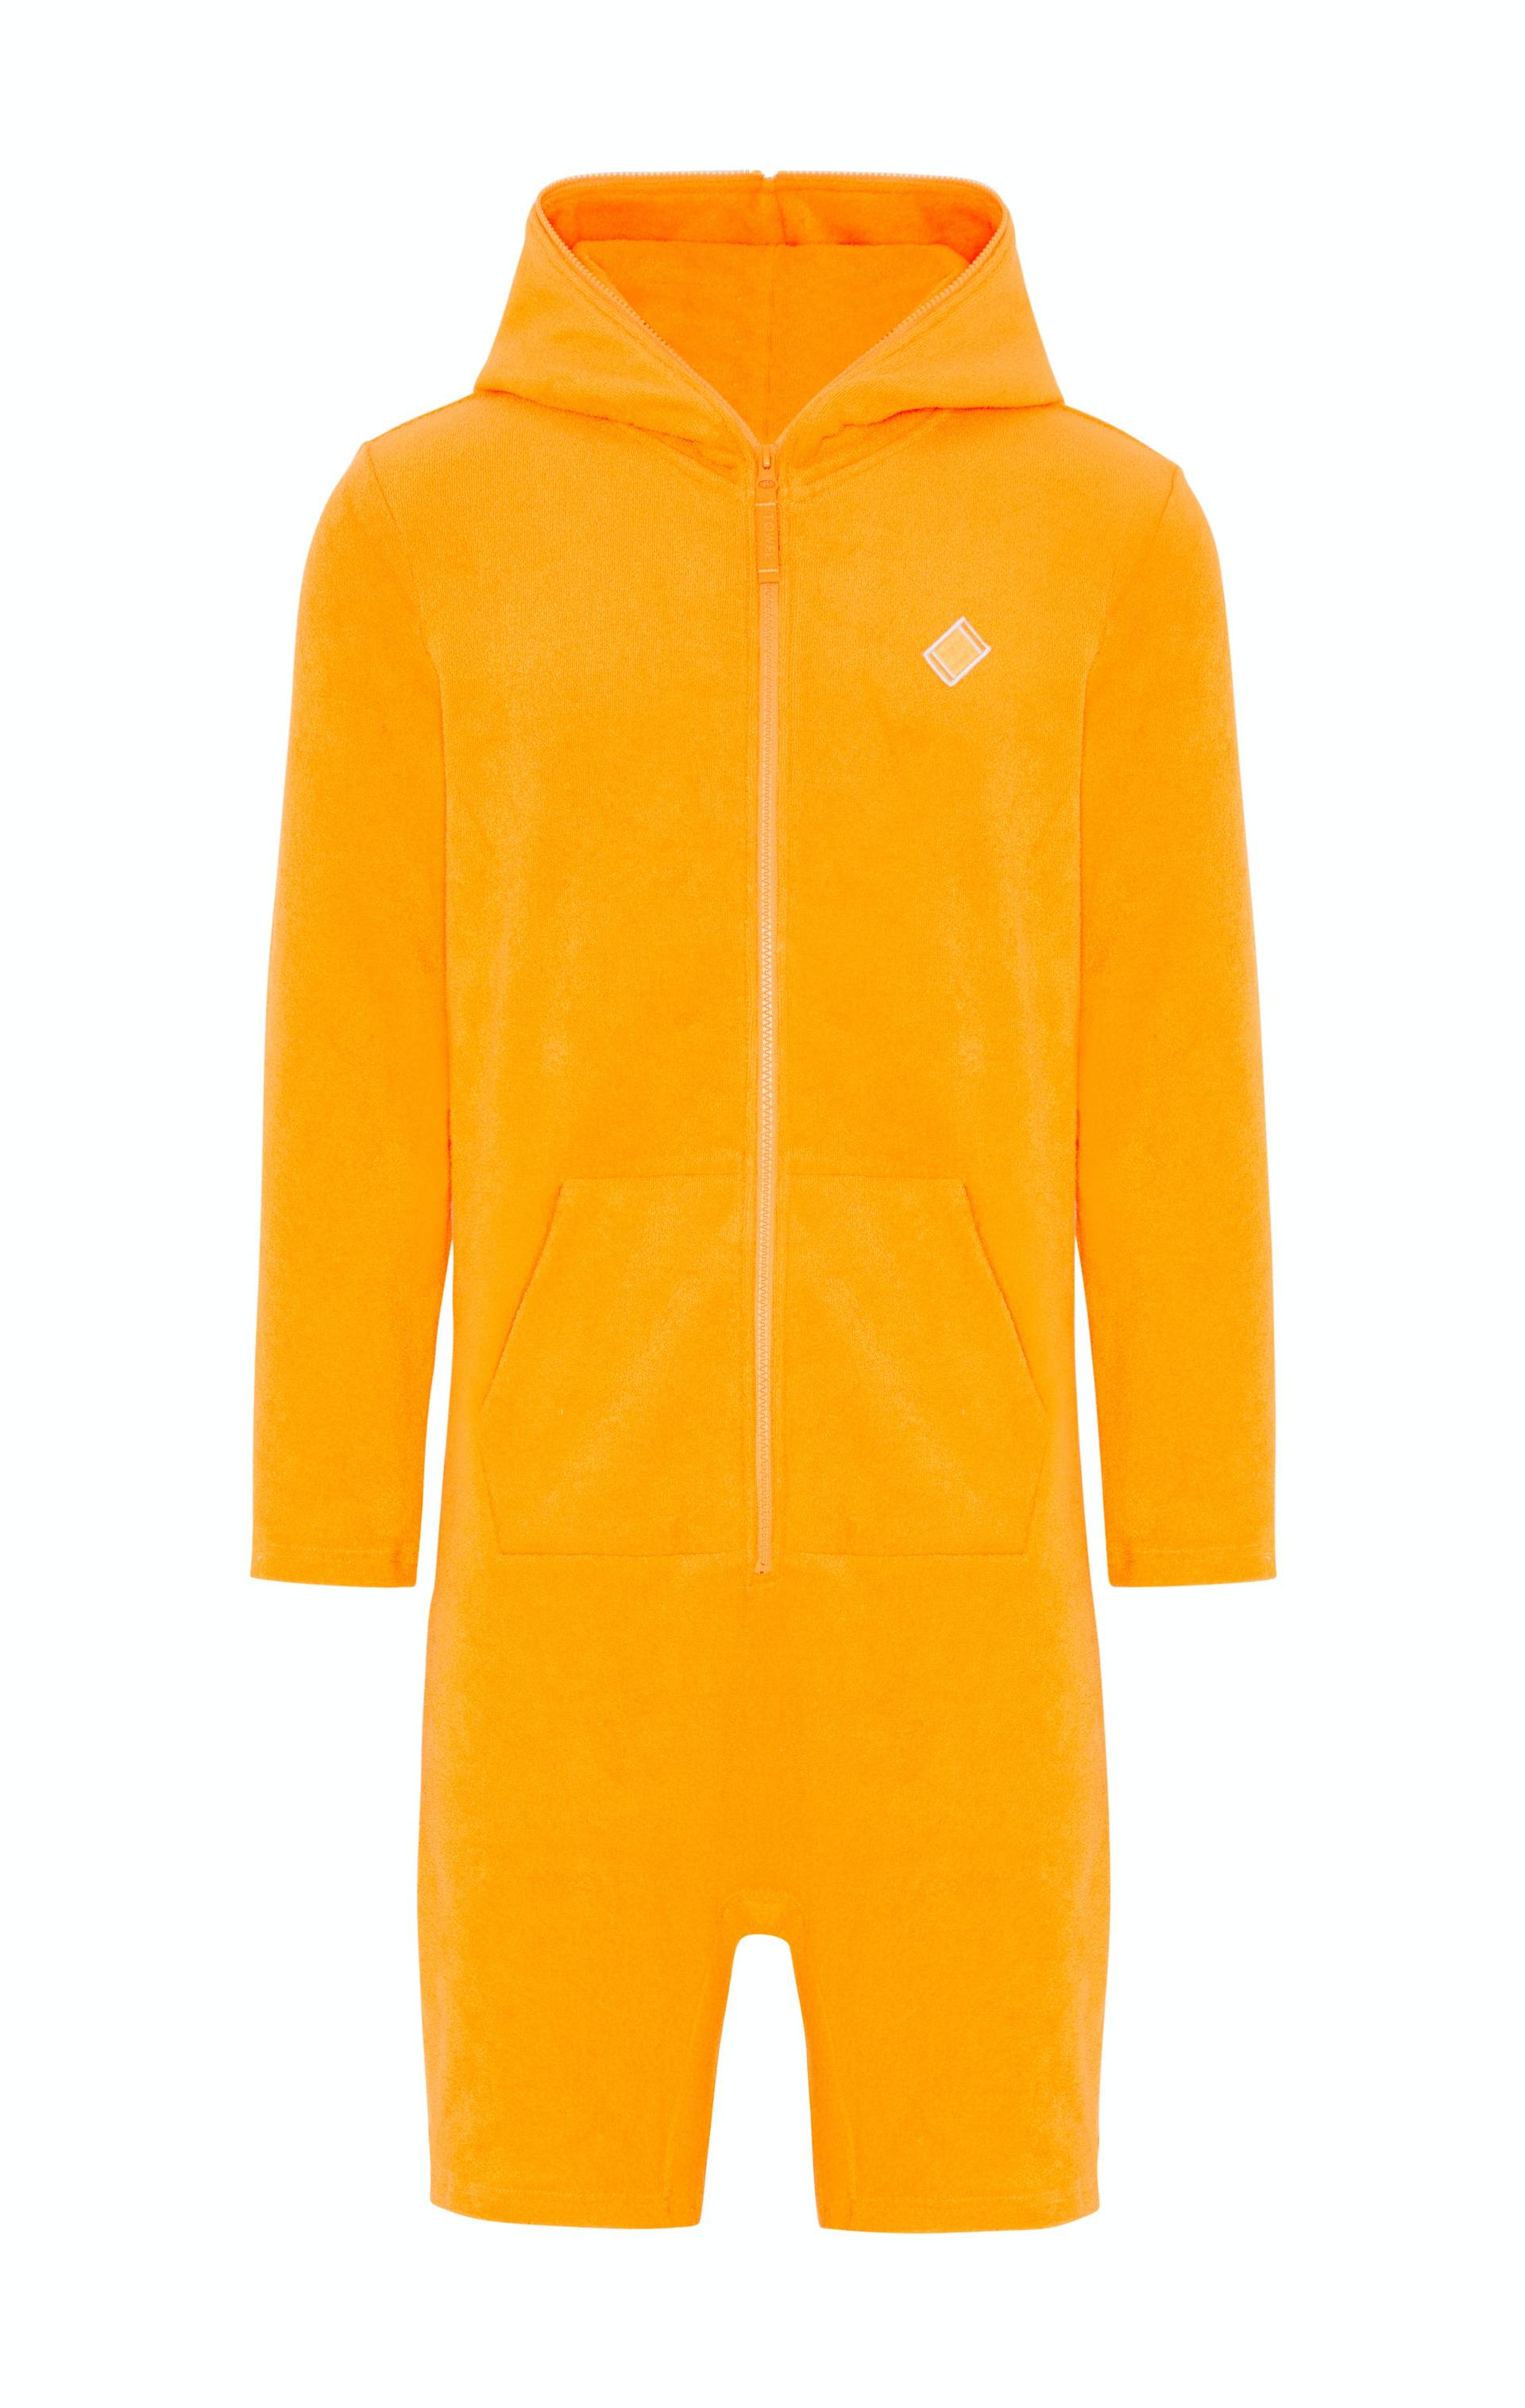 Onepiece Towel Club X Onepiece Towel Jumpsuit Orange - 1